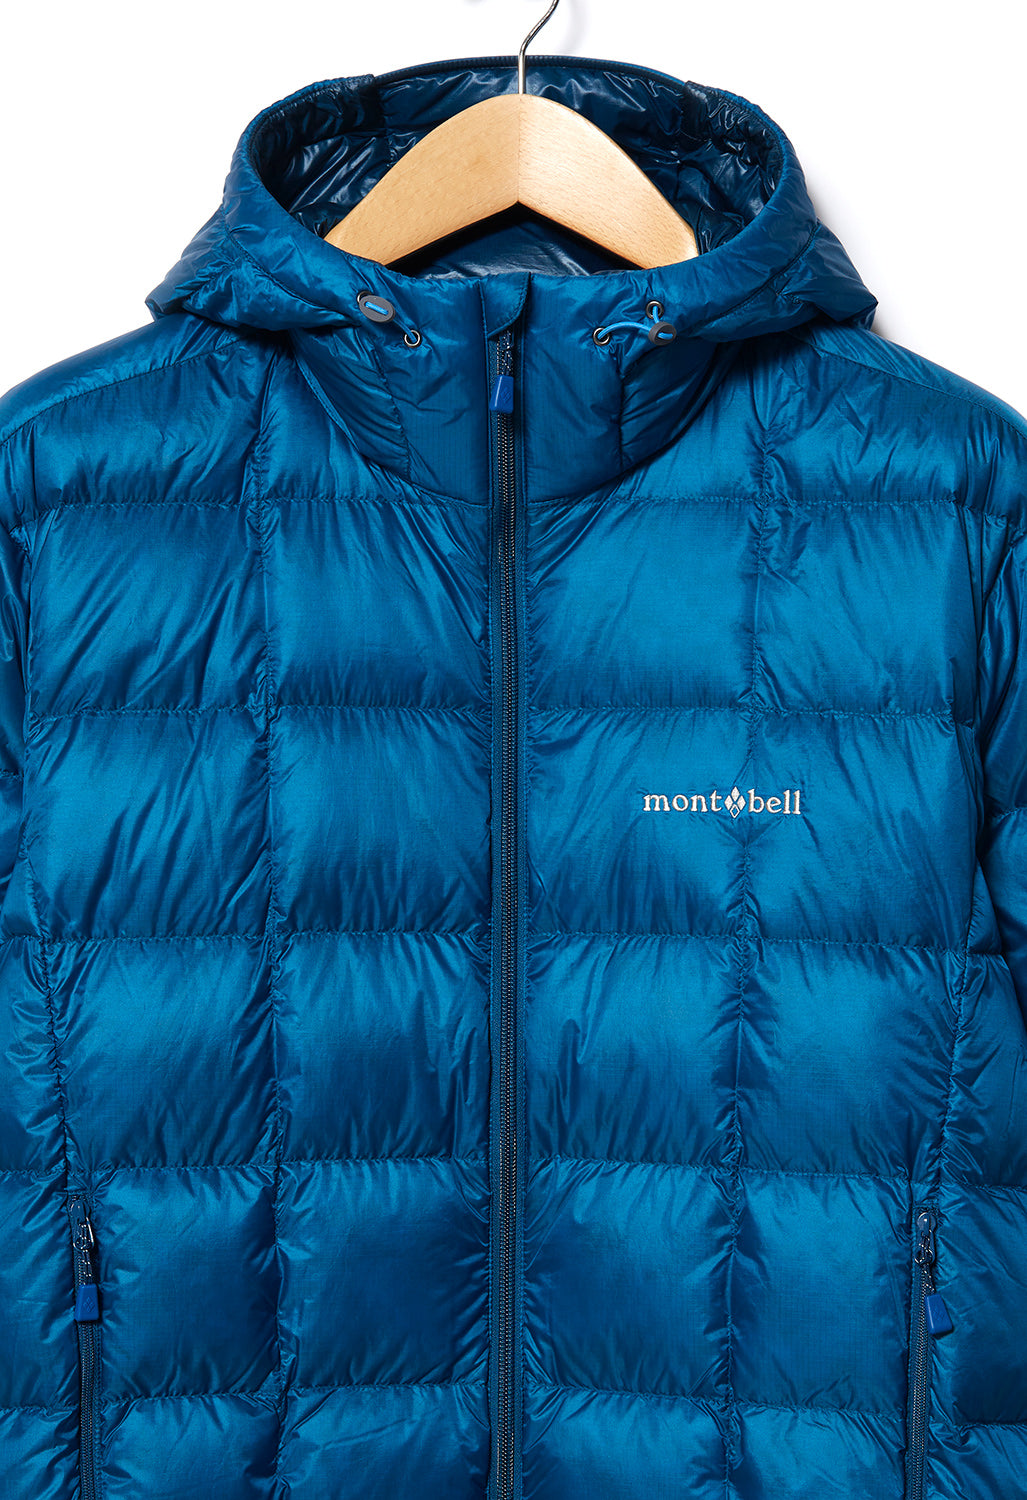 Montbell Superior Down Parka Men's Size: L / Color (style): blue